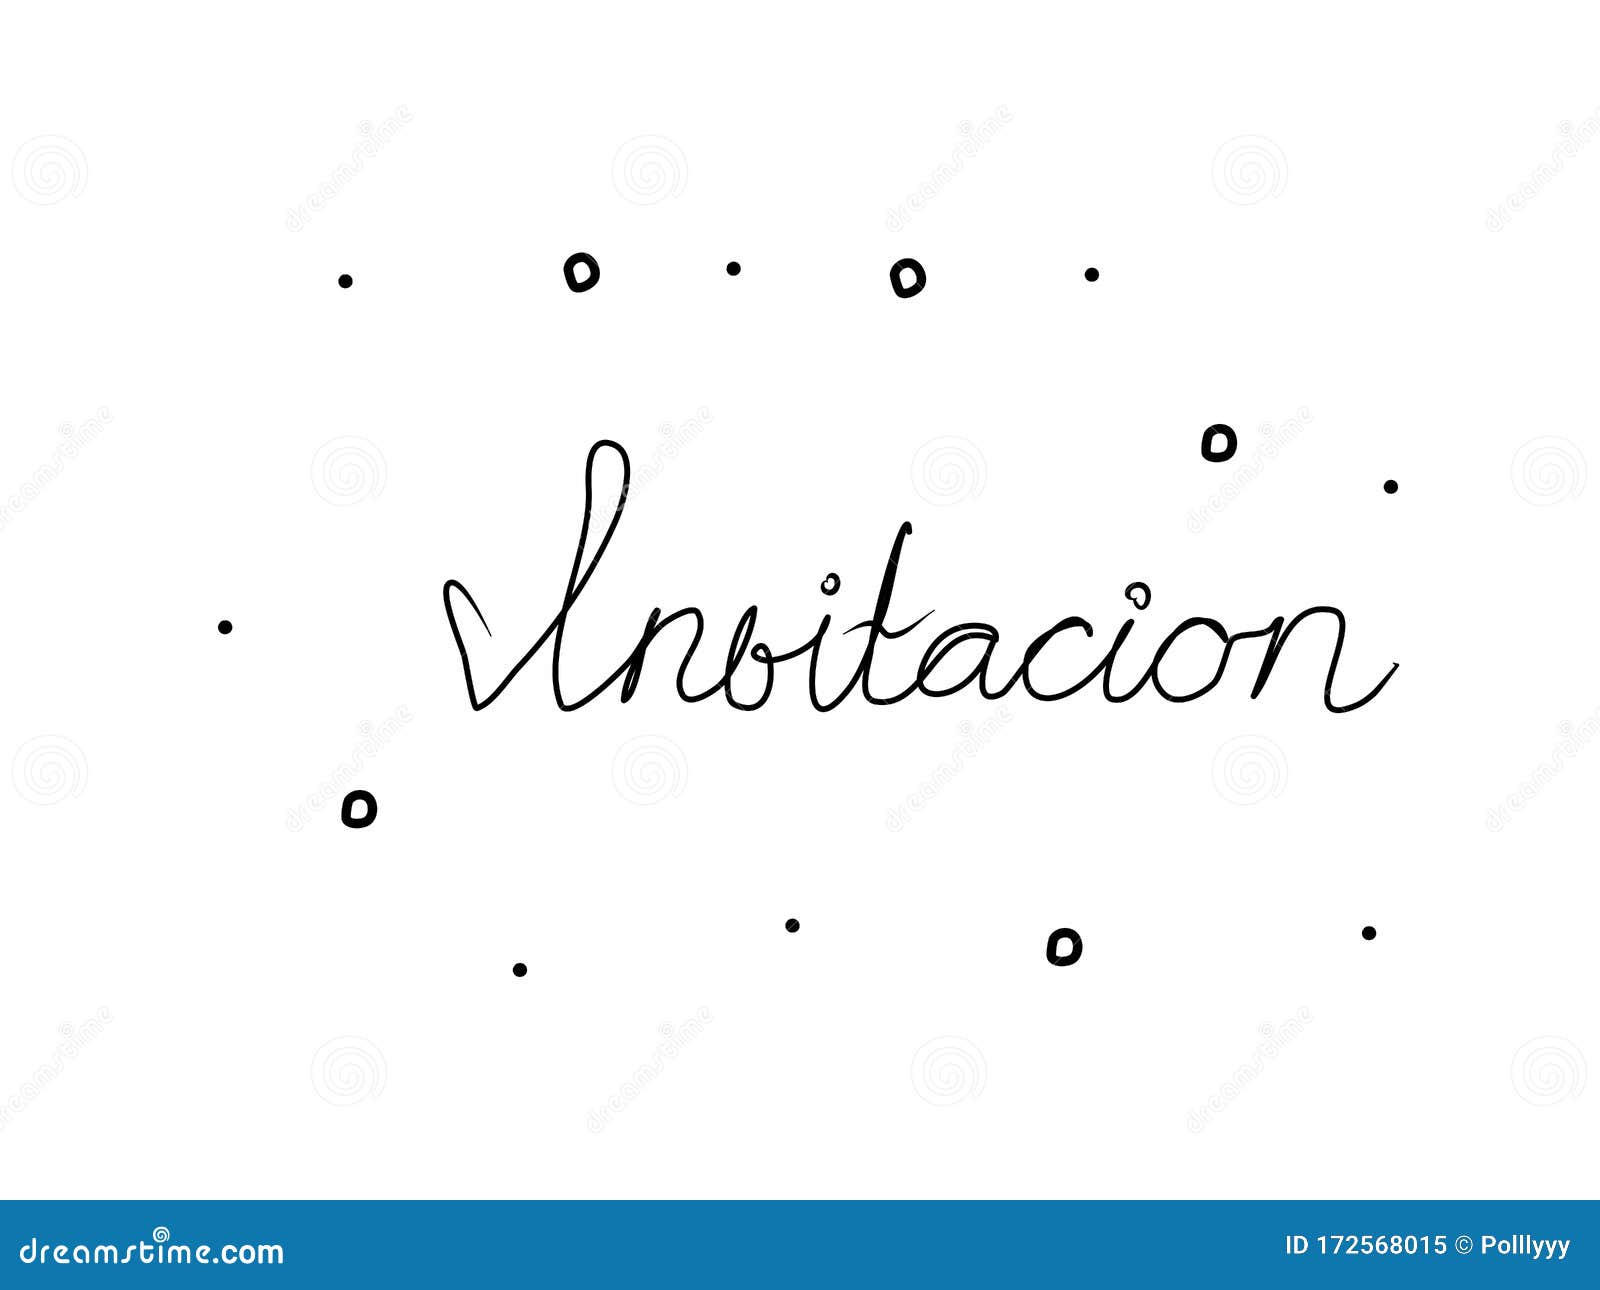 invitacion phrase handwritten with a calligraphy brush. invitation in spanish. modern brush calligraphy.  word black